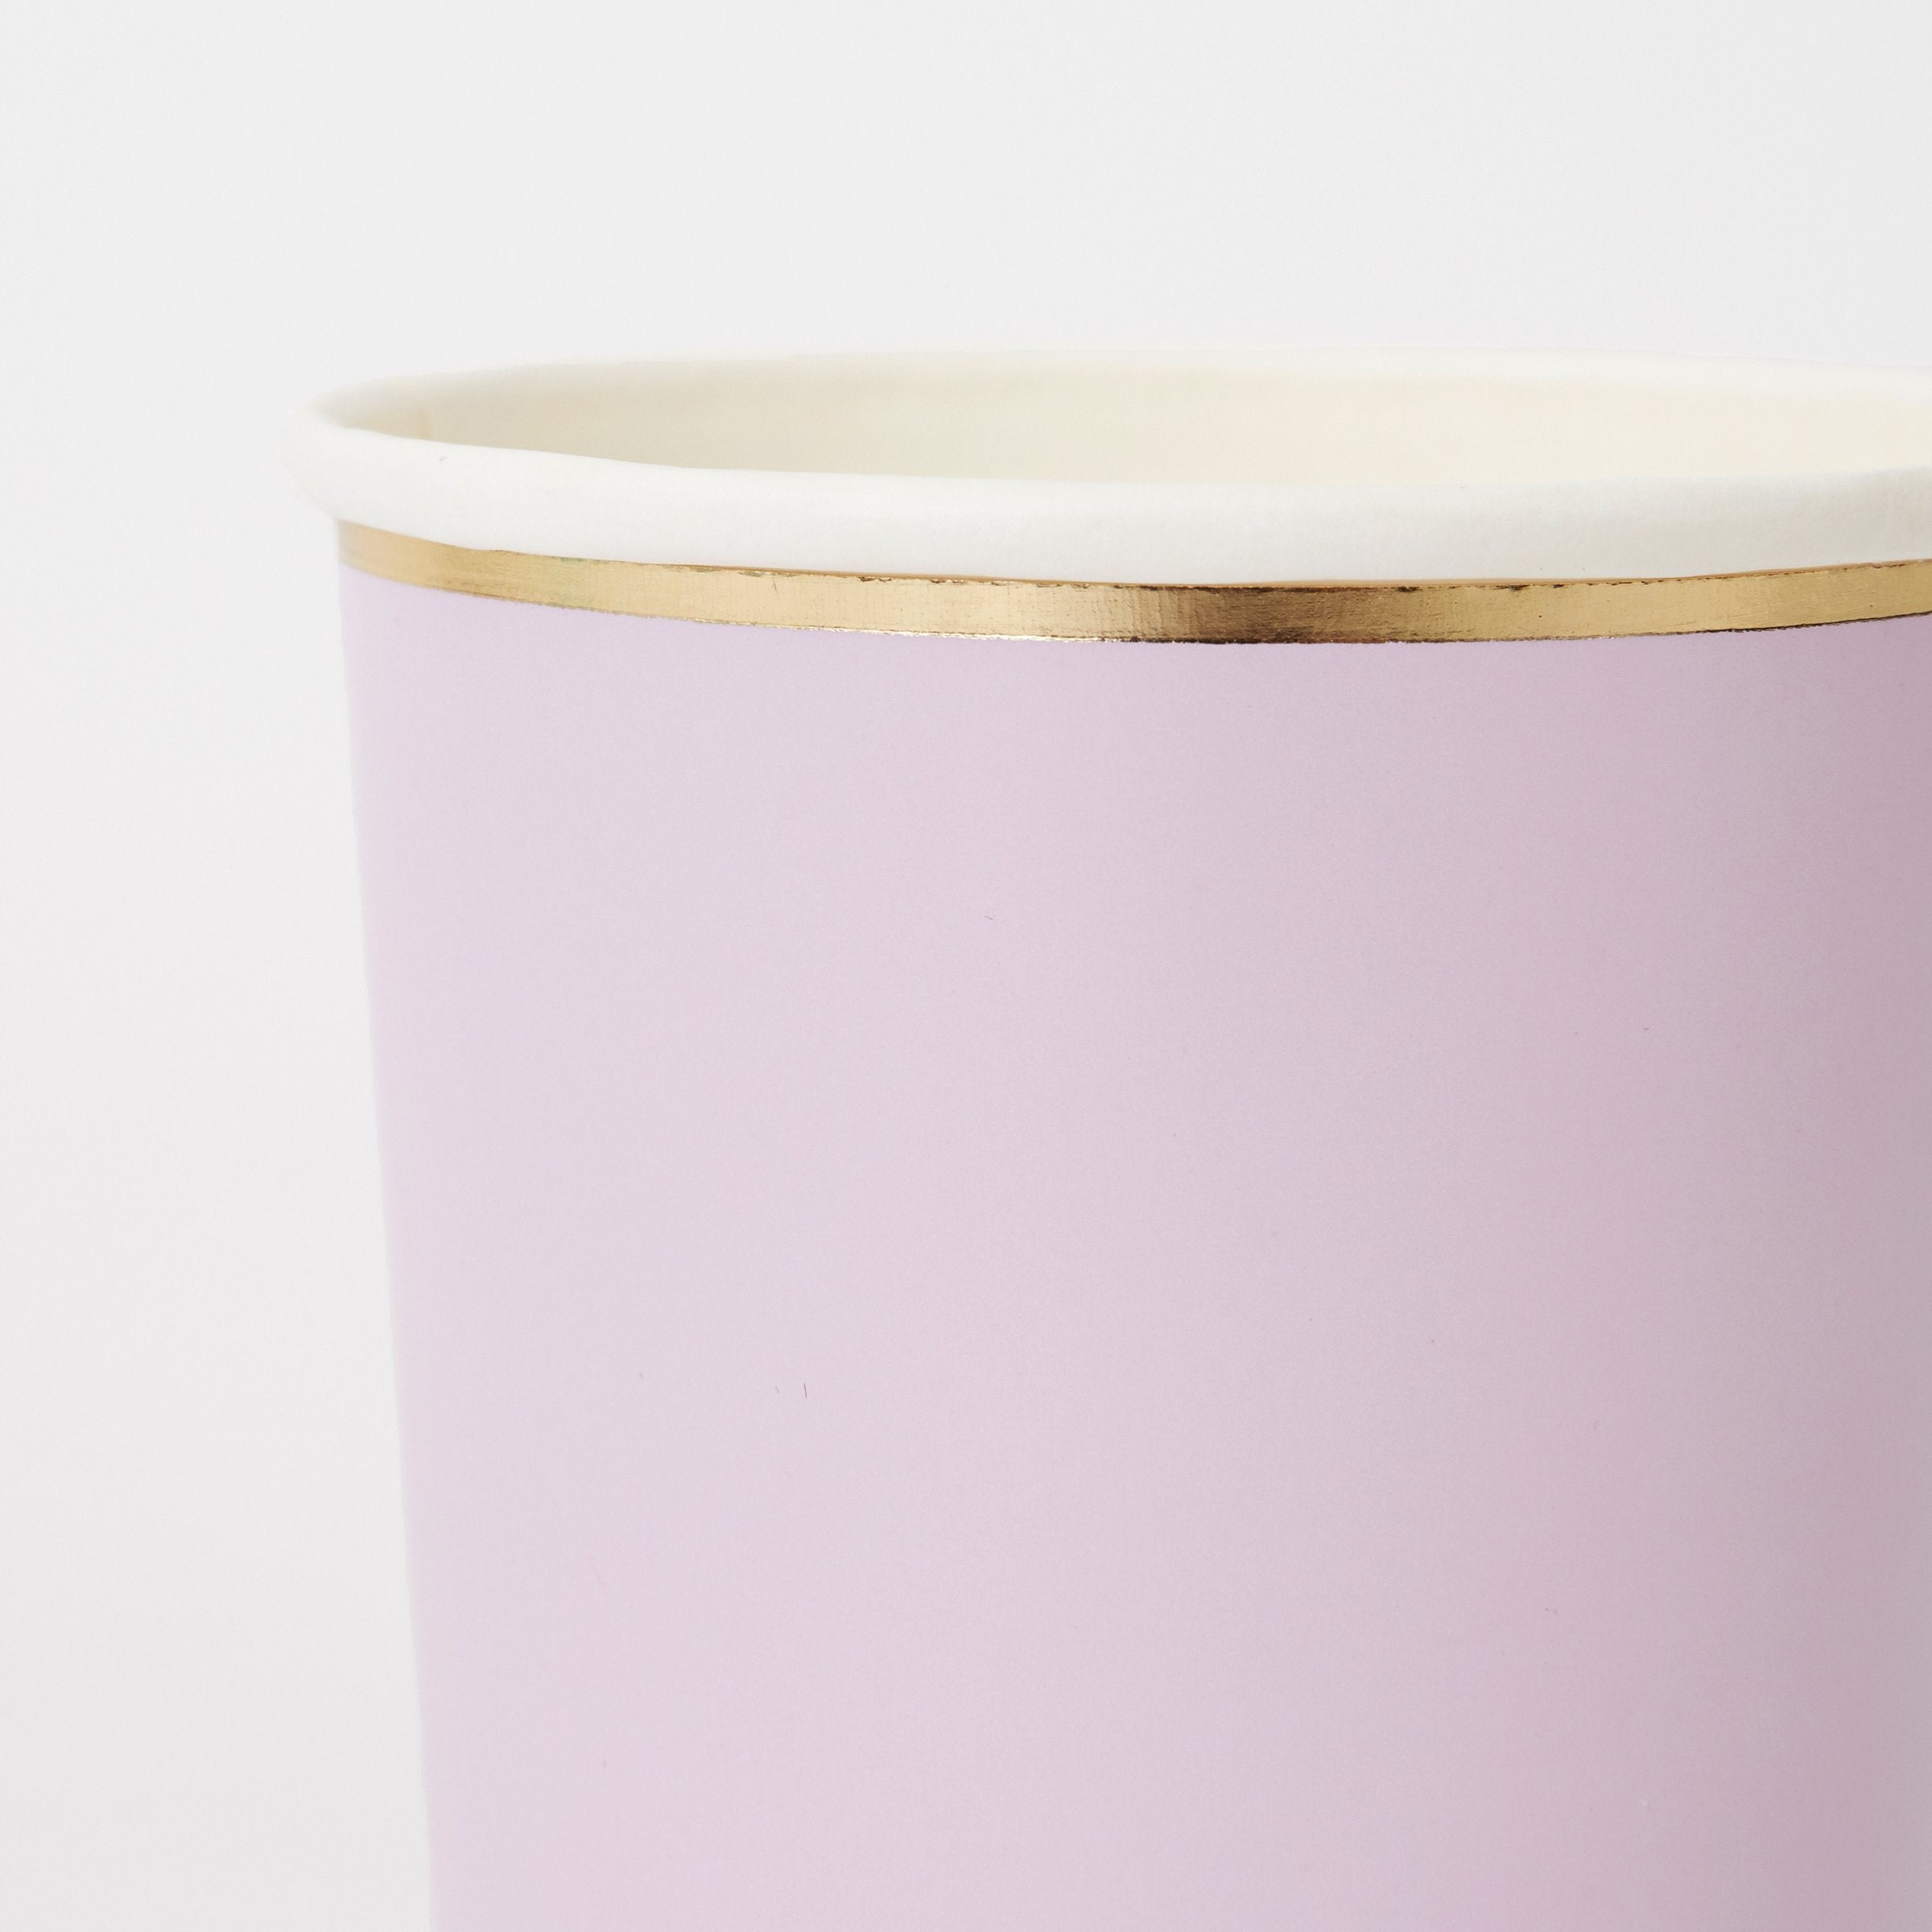 Lilac Highball Cups